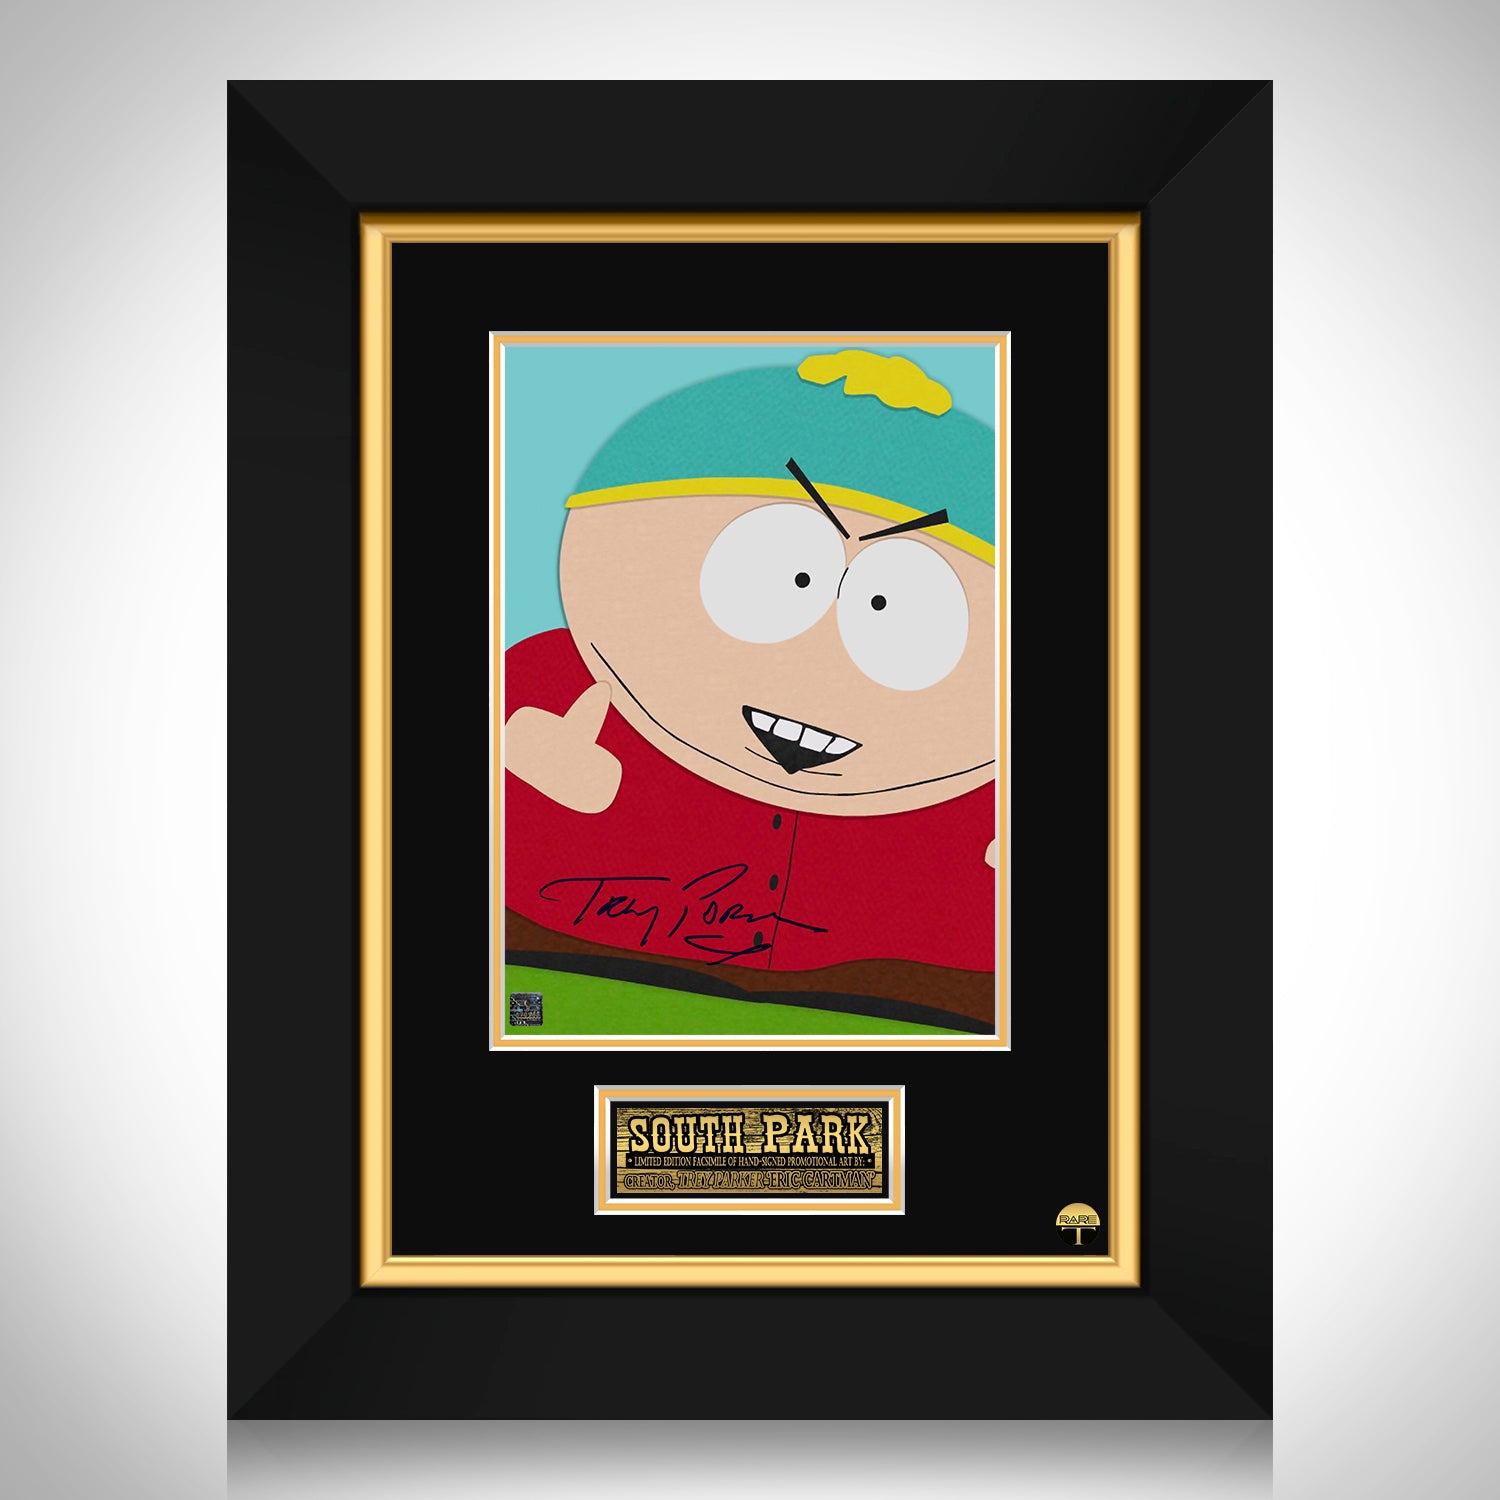 cartman iphone wallpaper